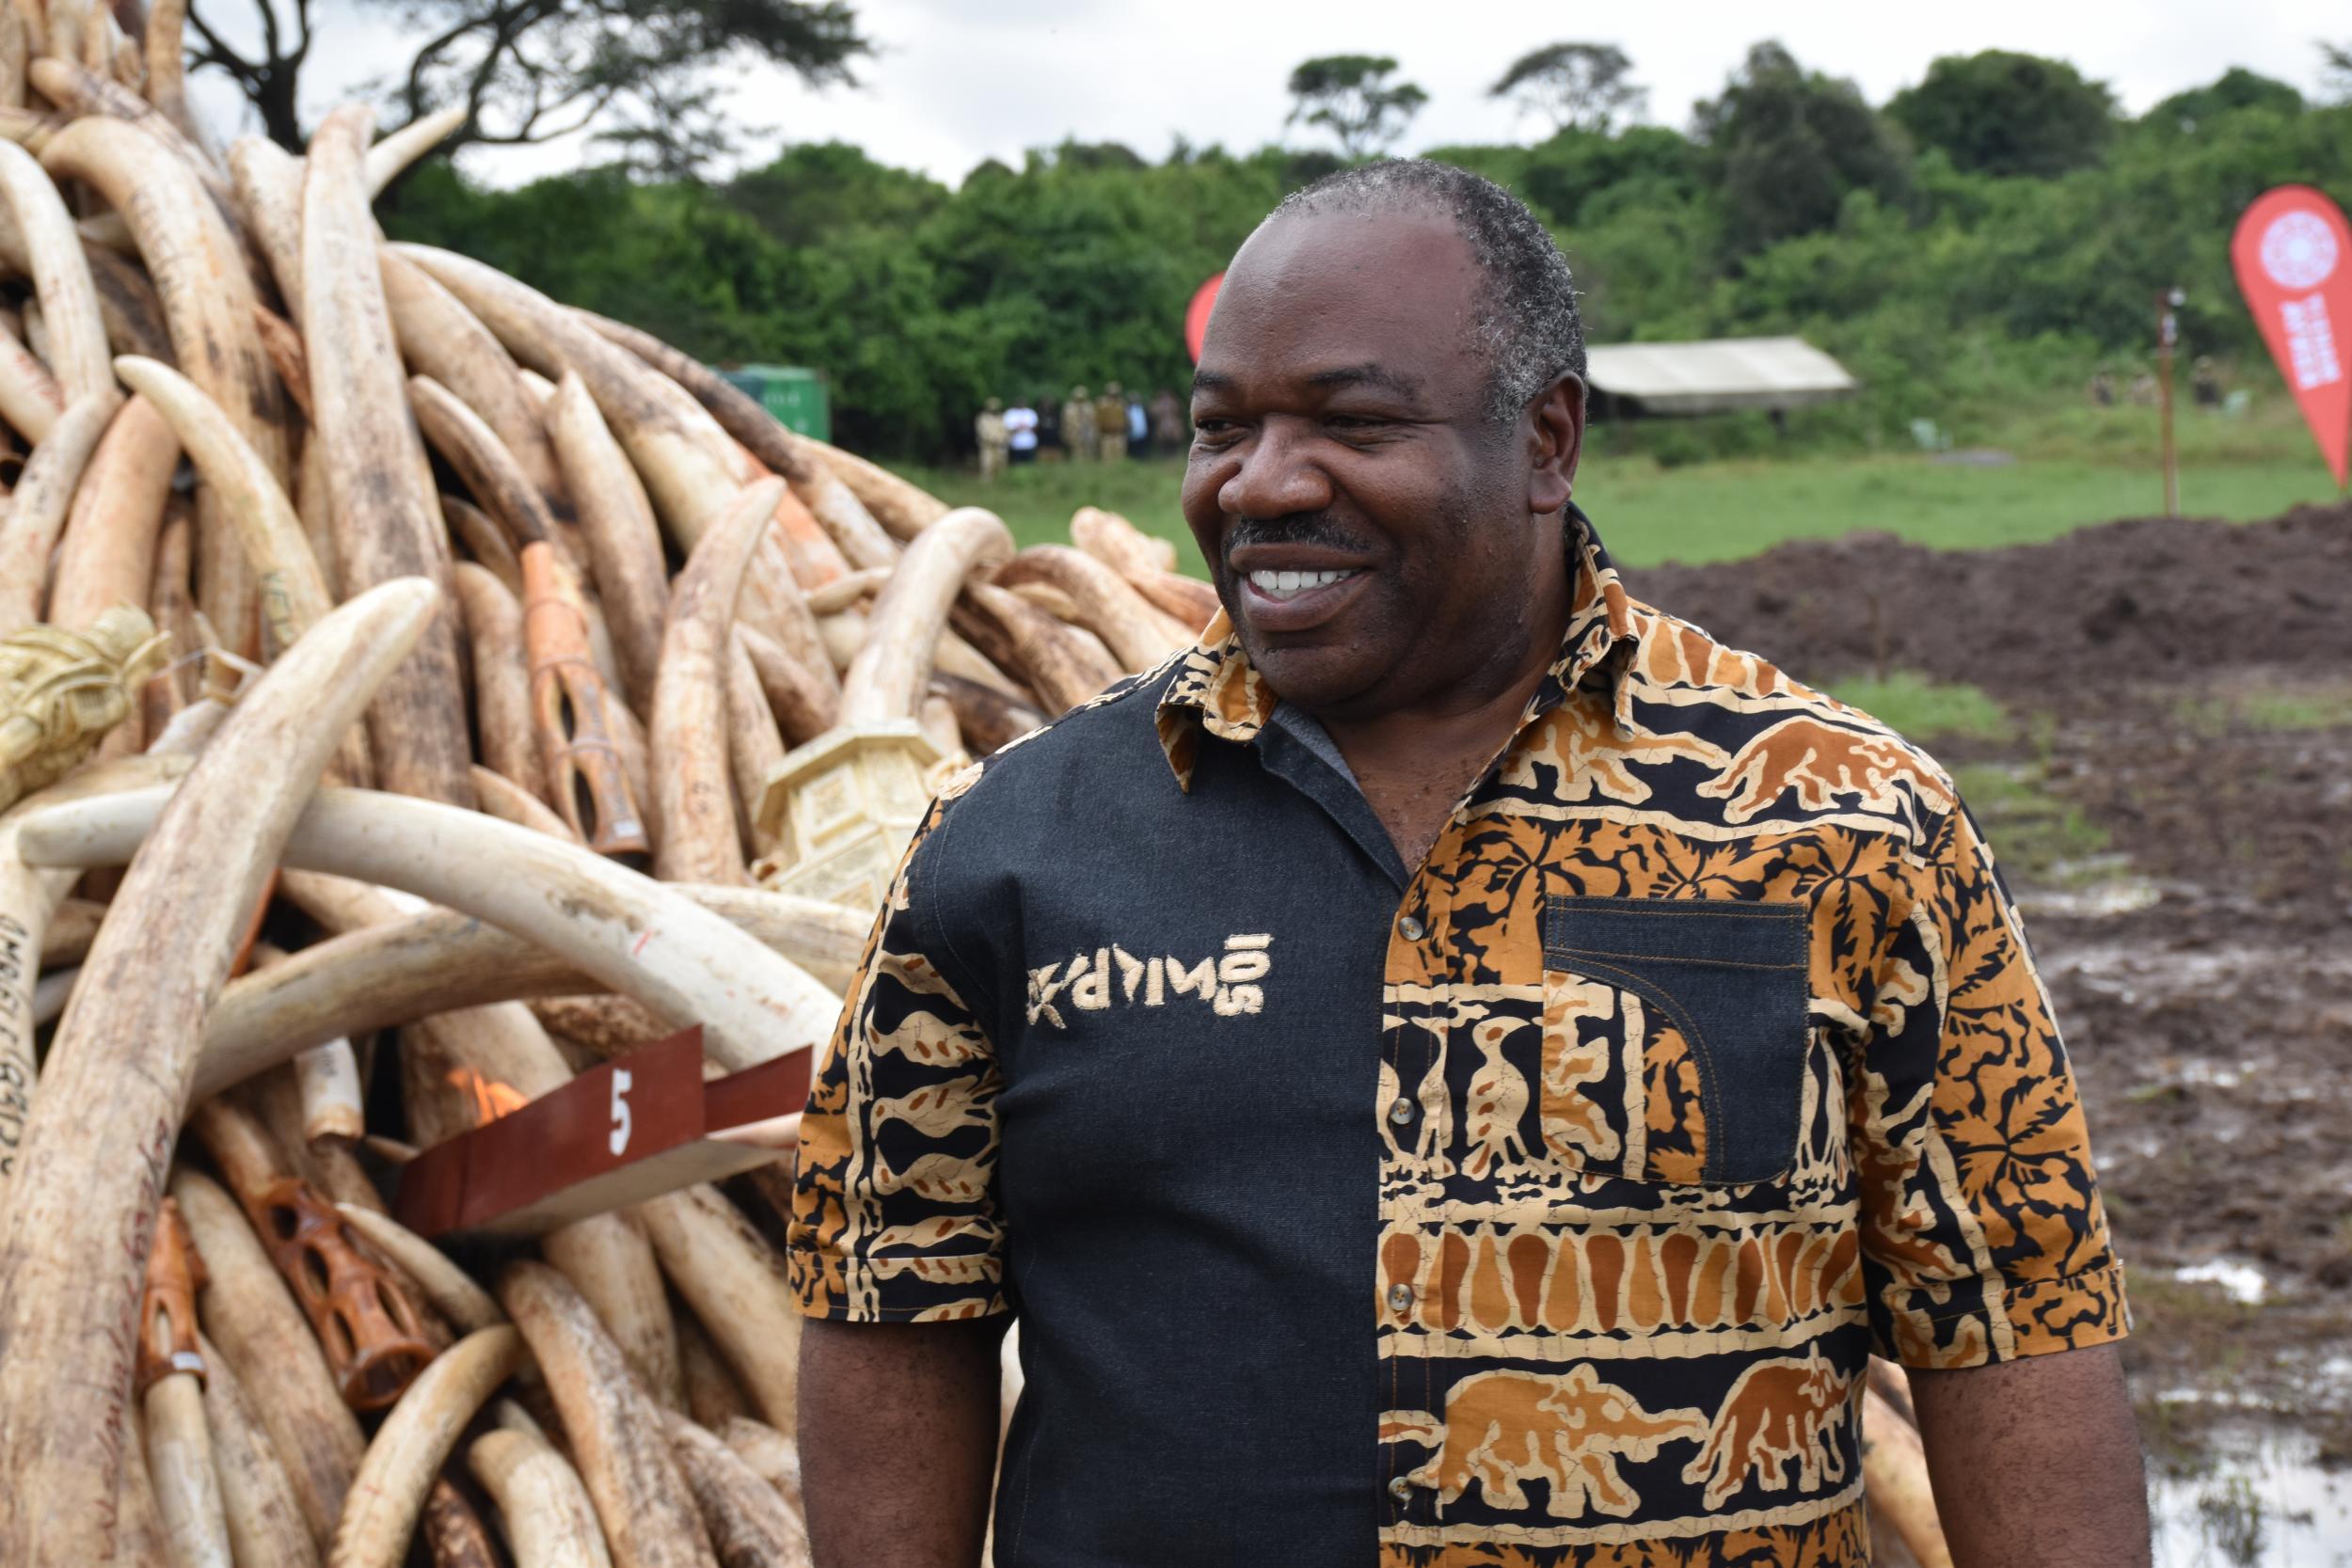 Ali Bongo Ondimba, President of the Republic of Gabon, at a burn of ivory stocks